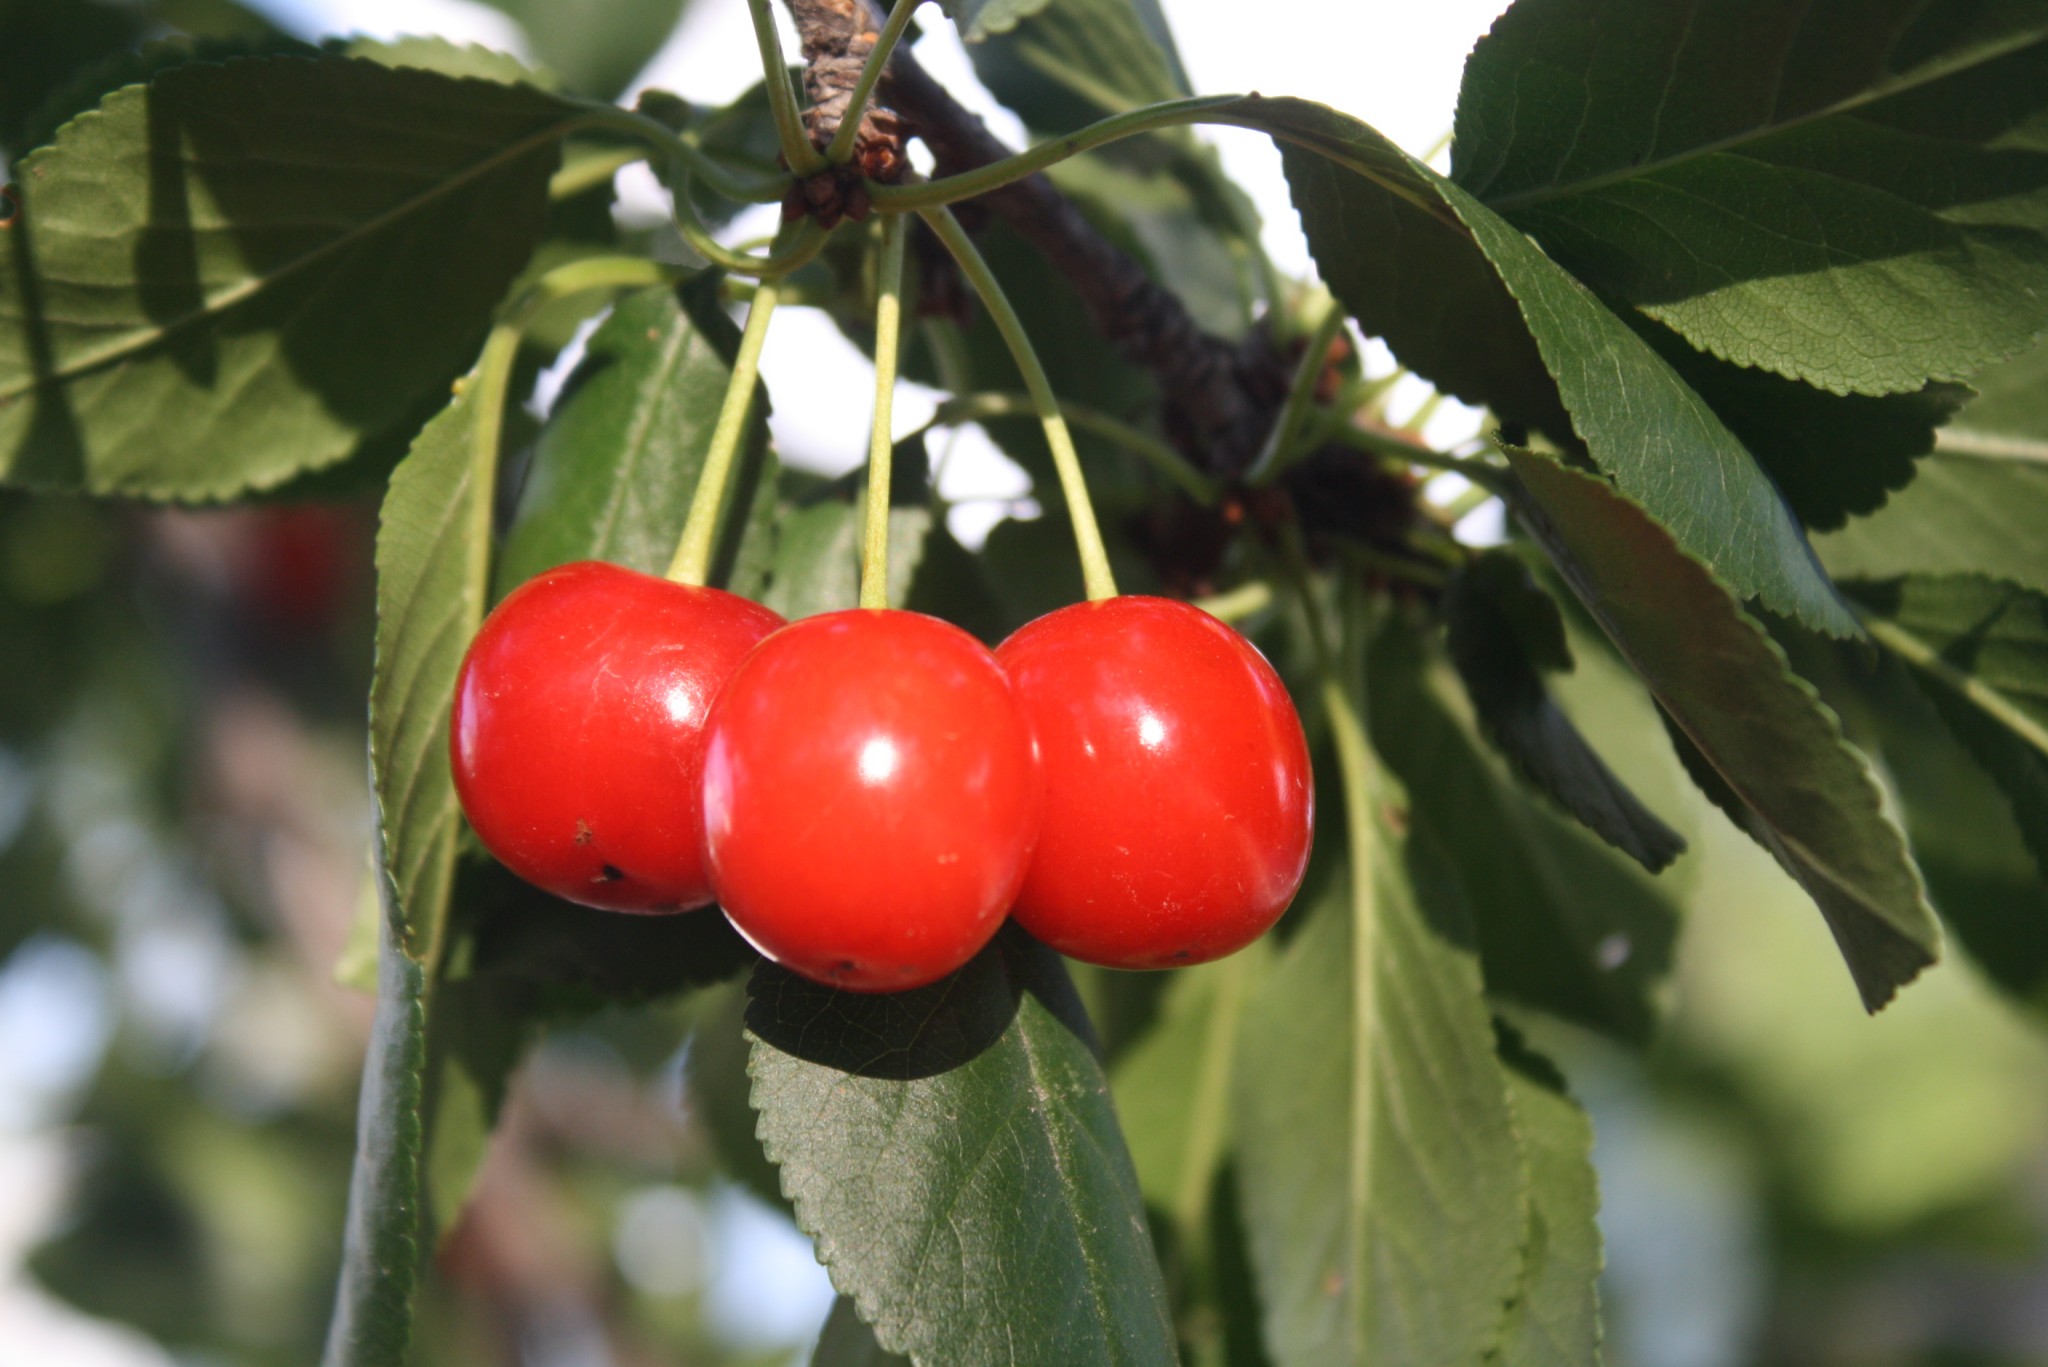 Red Berries - Edible or Not Edible? - GettyStewart.com